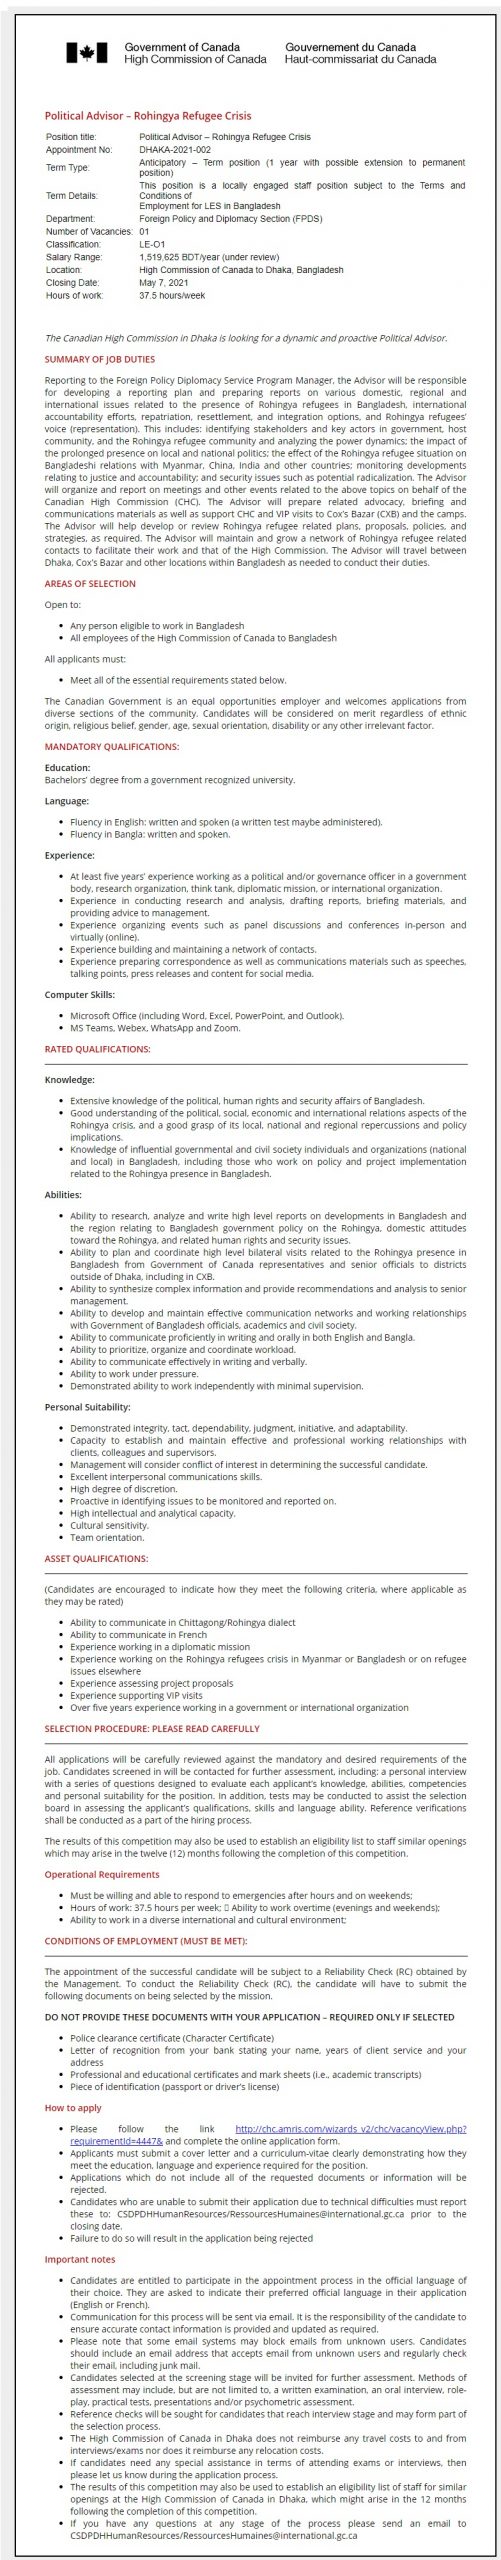 Canada High Commission Job Circular 2021